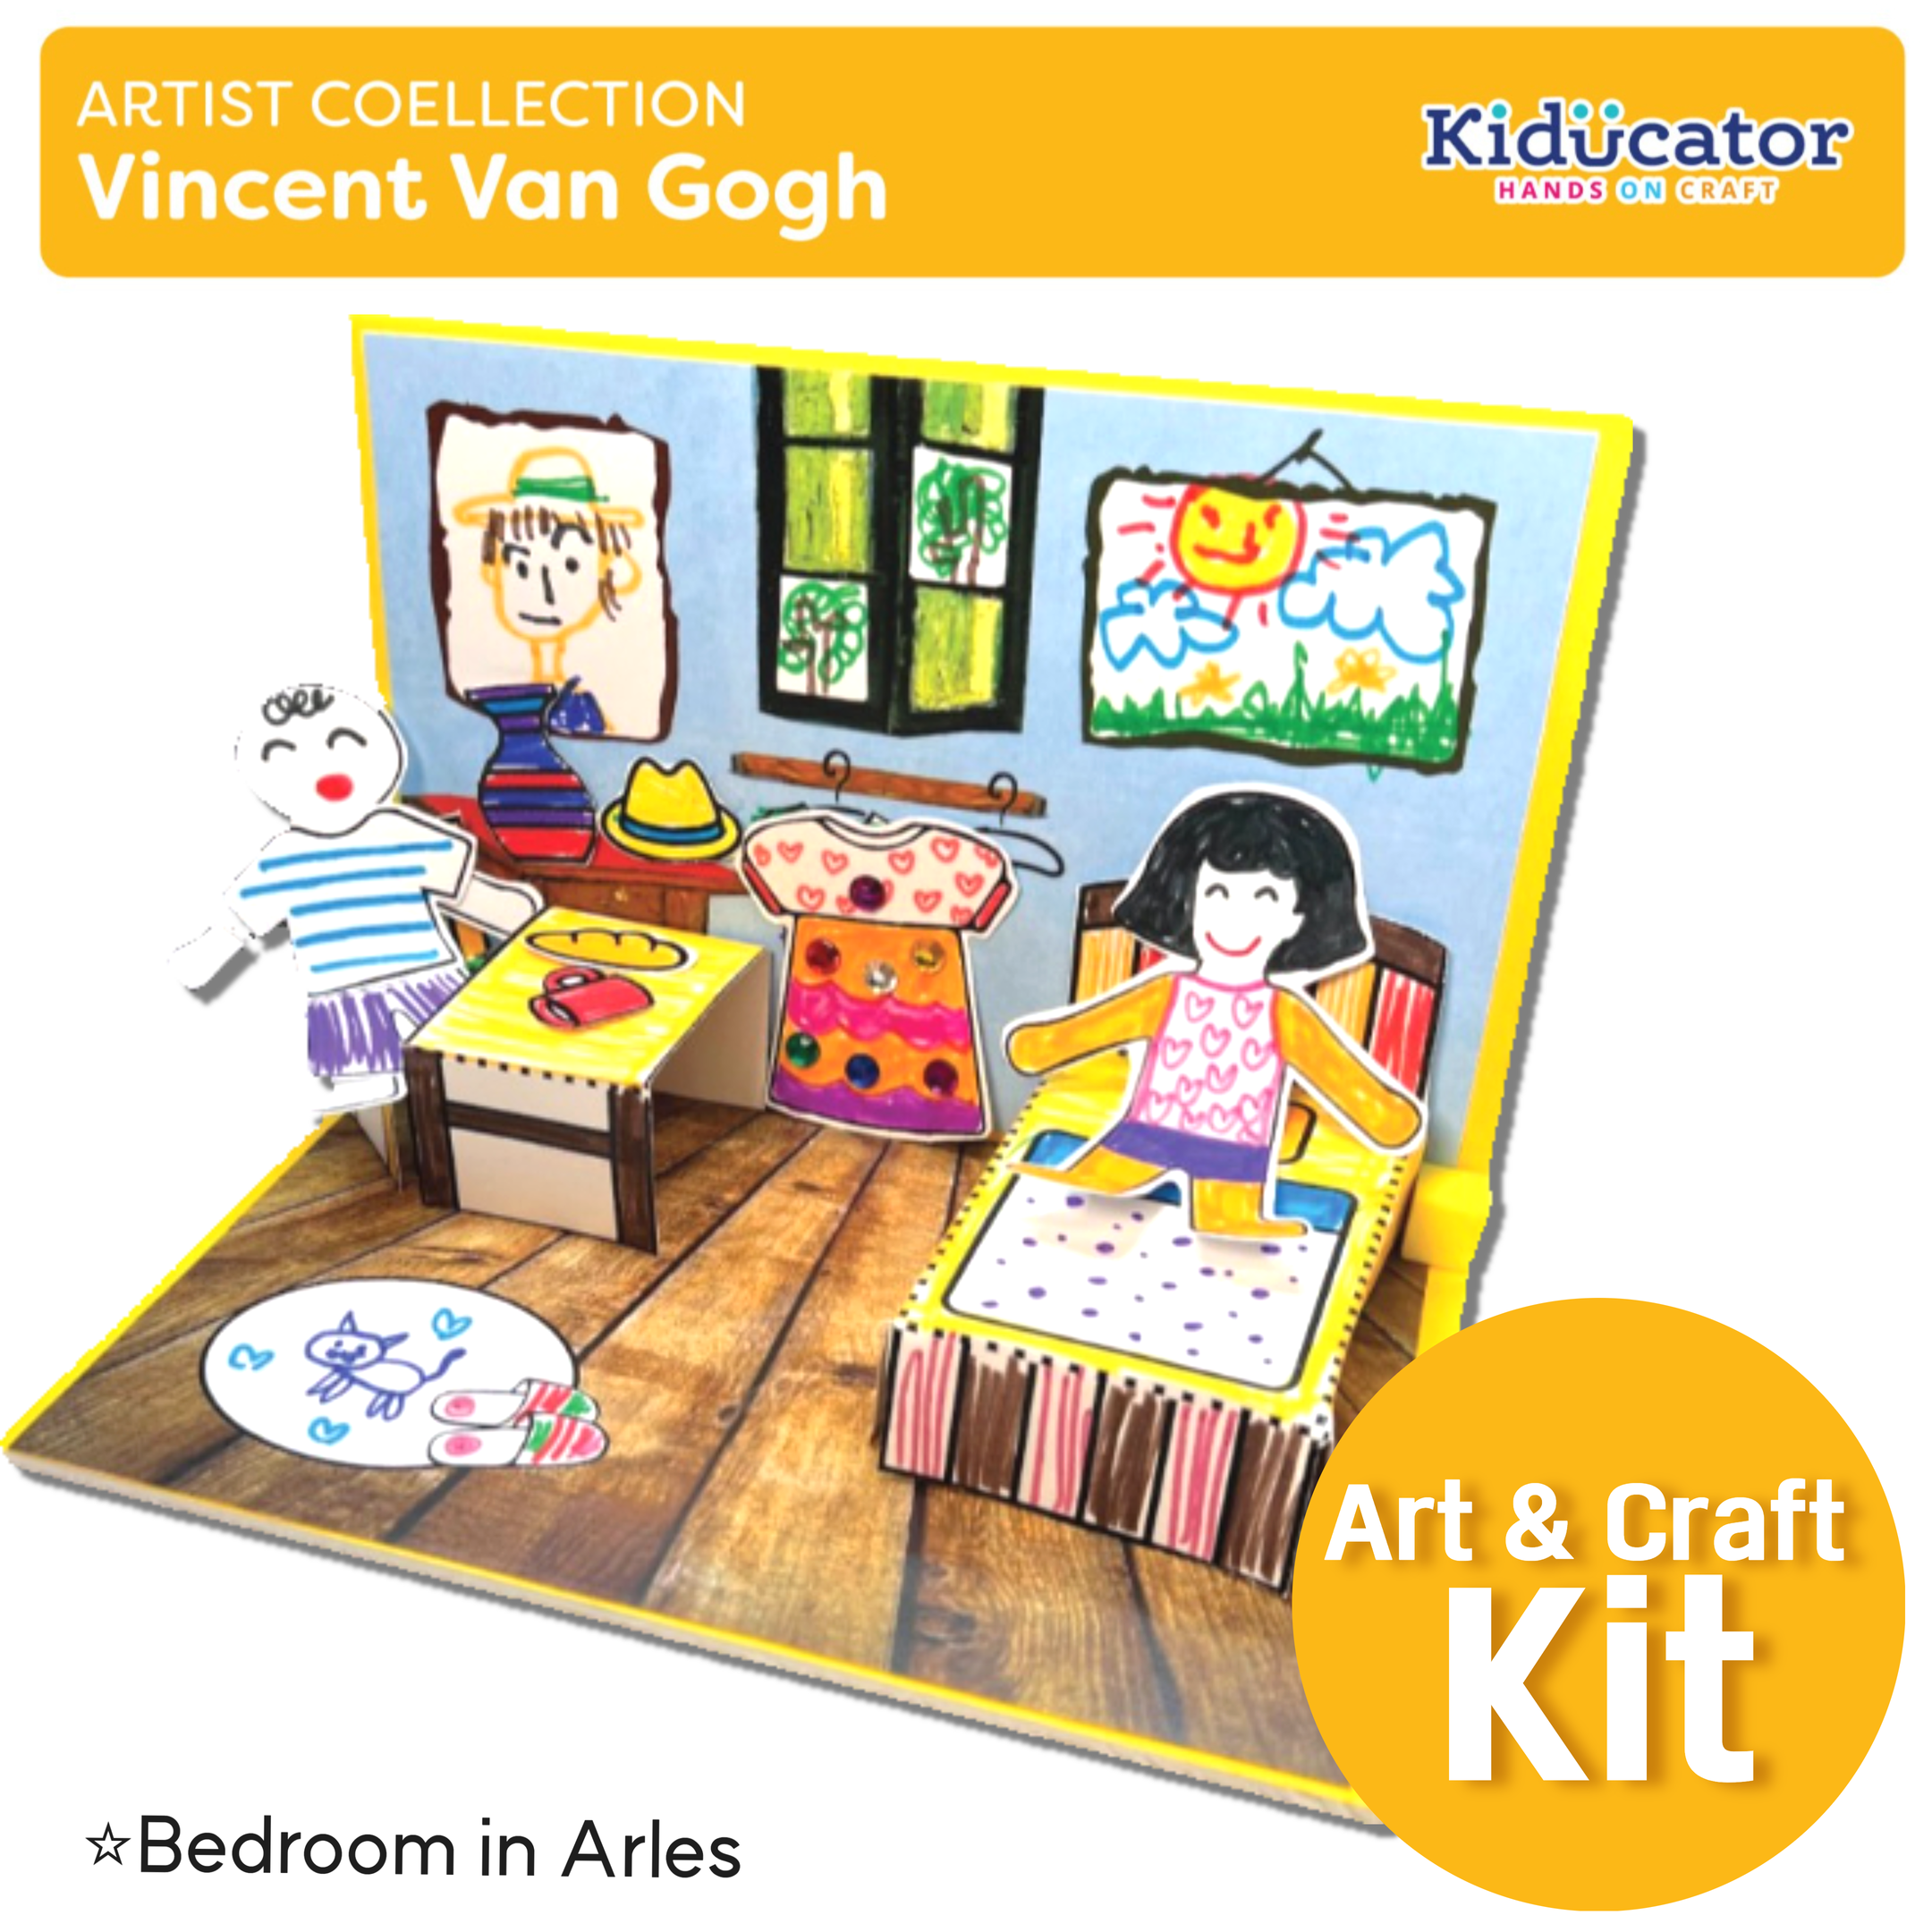 🌻Van Gogh Art & Craft Kit - Museum Artist Collection 🎨 – EDUBEBE